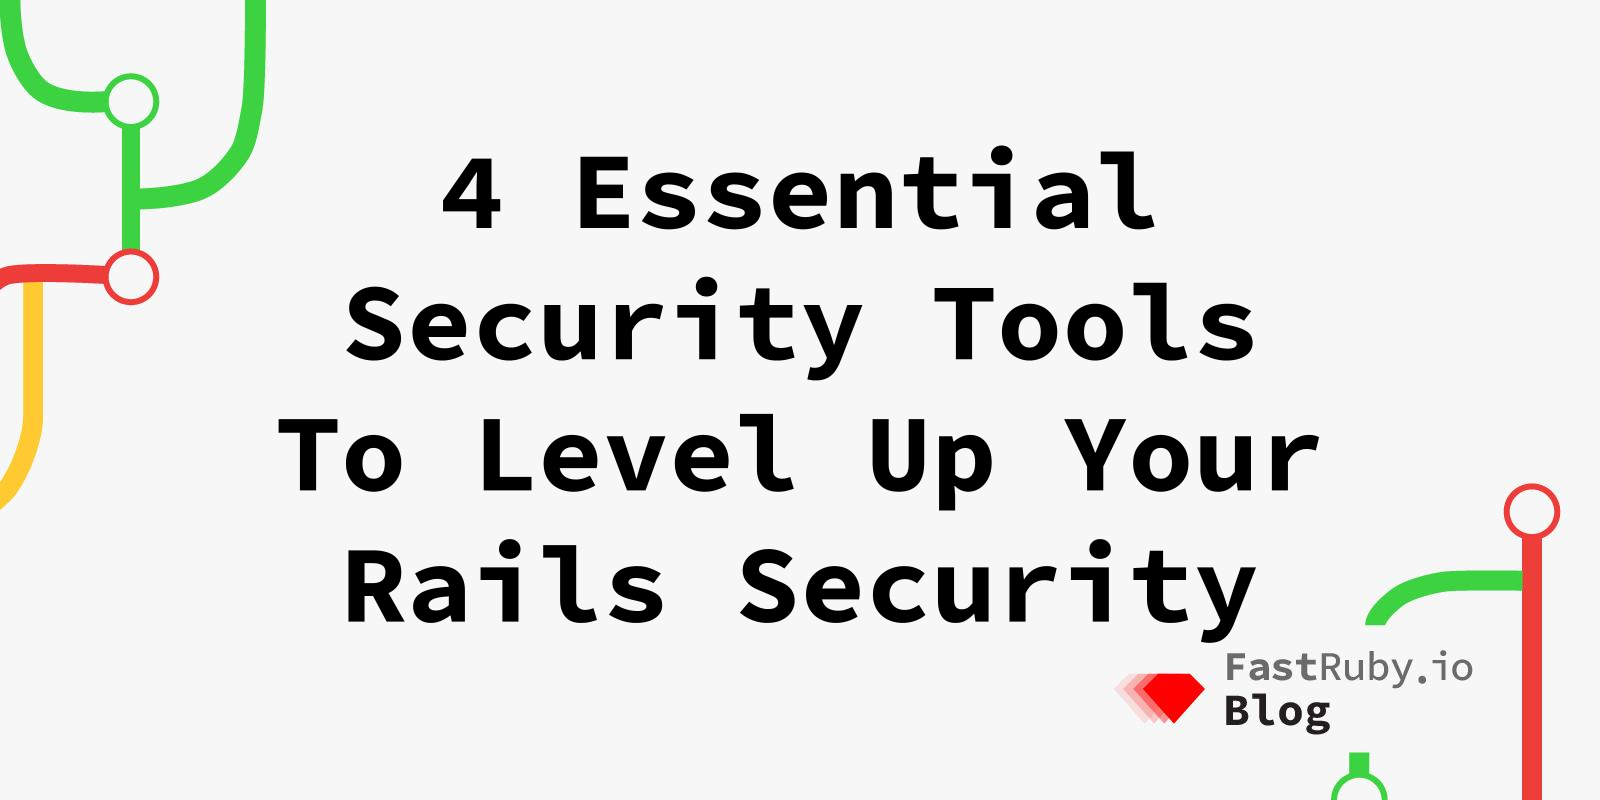 Rails security tools